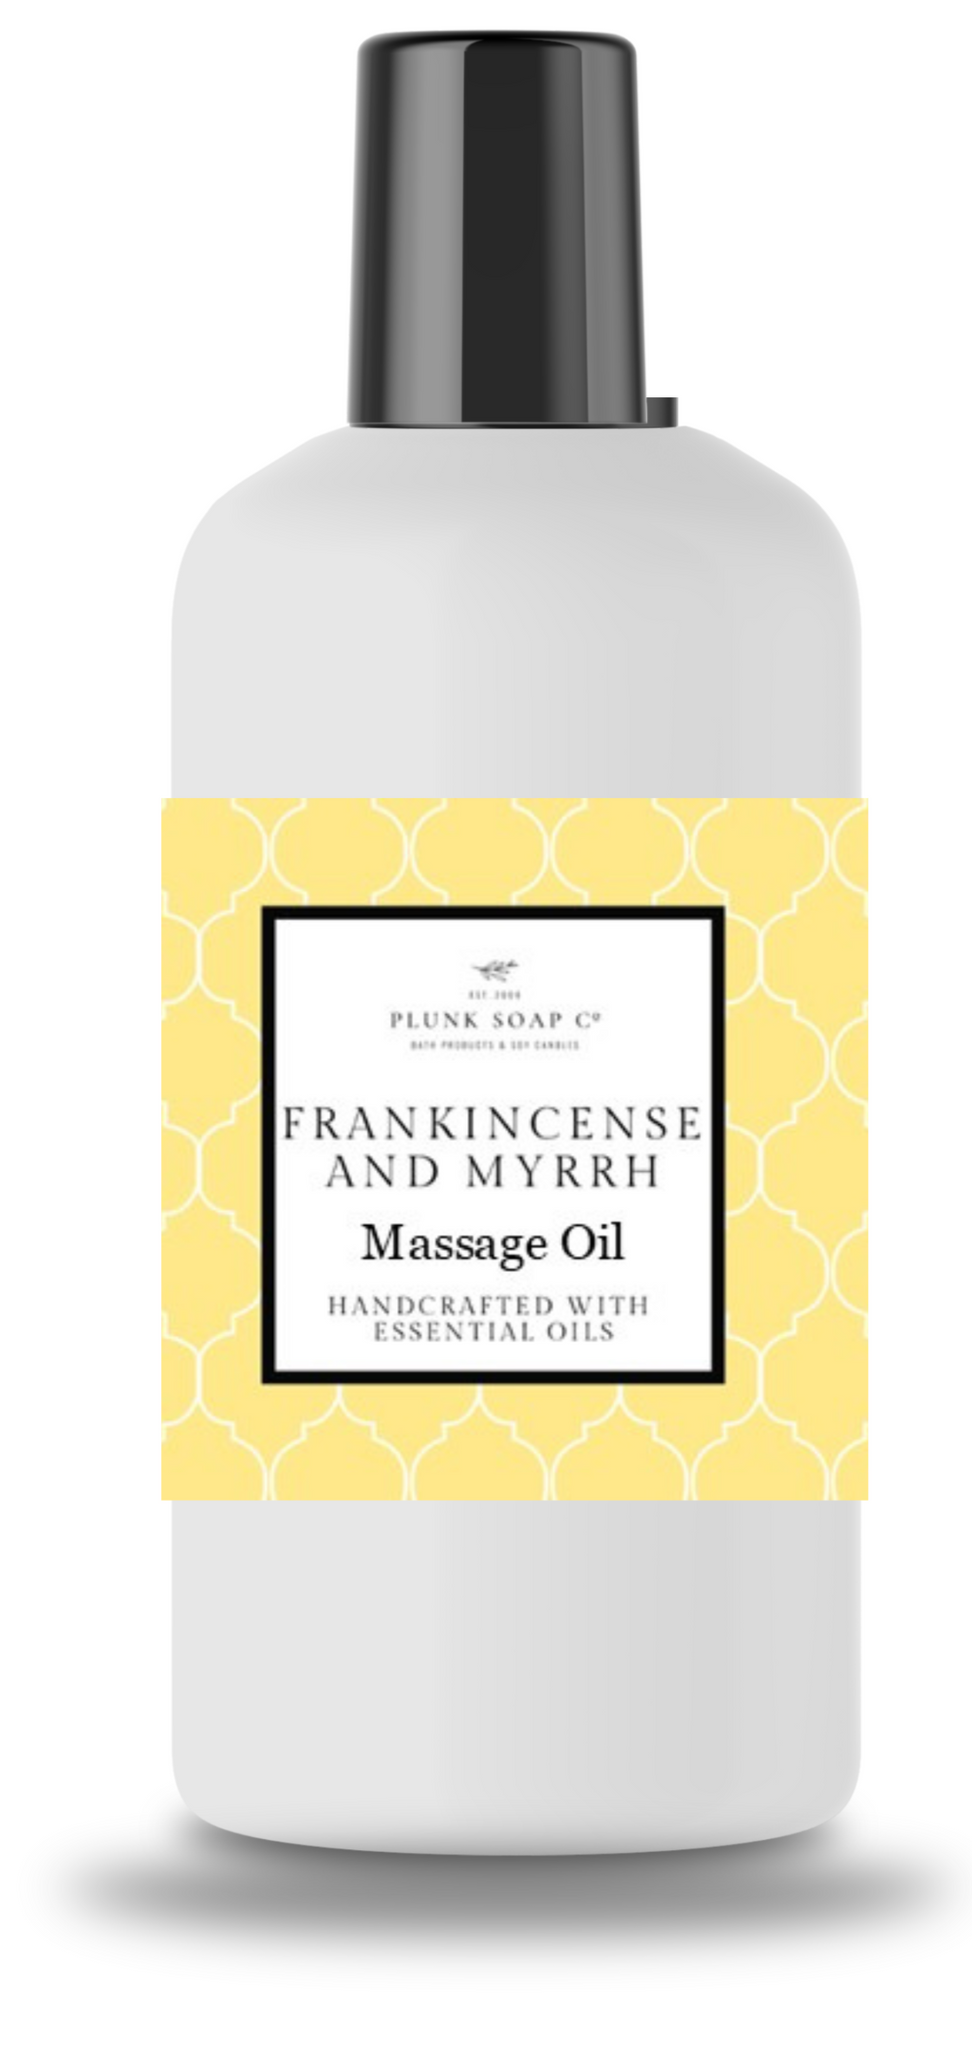 Frankincense and Myrrh Massage Oil